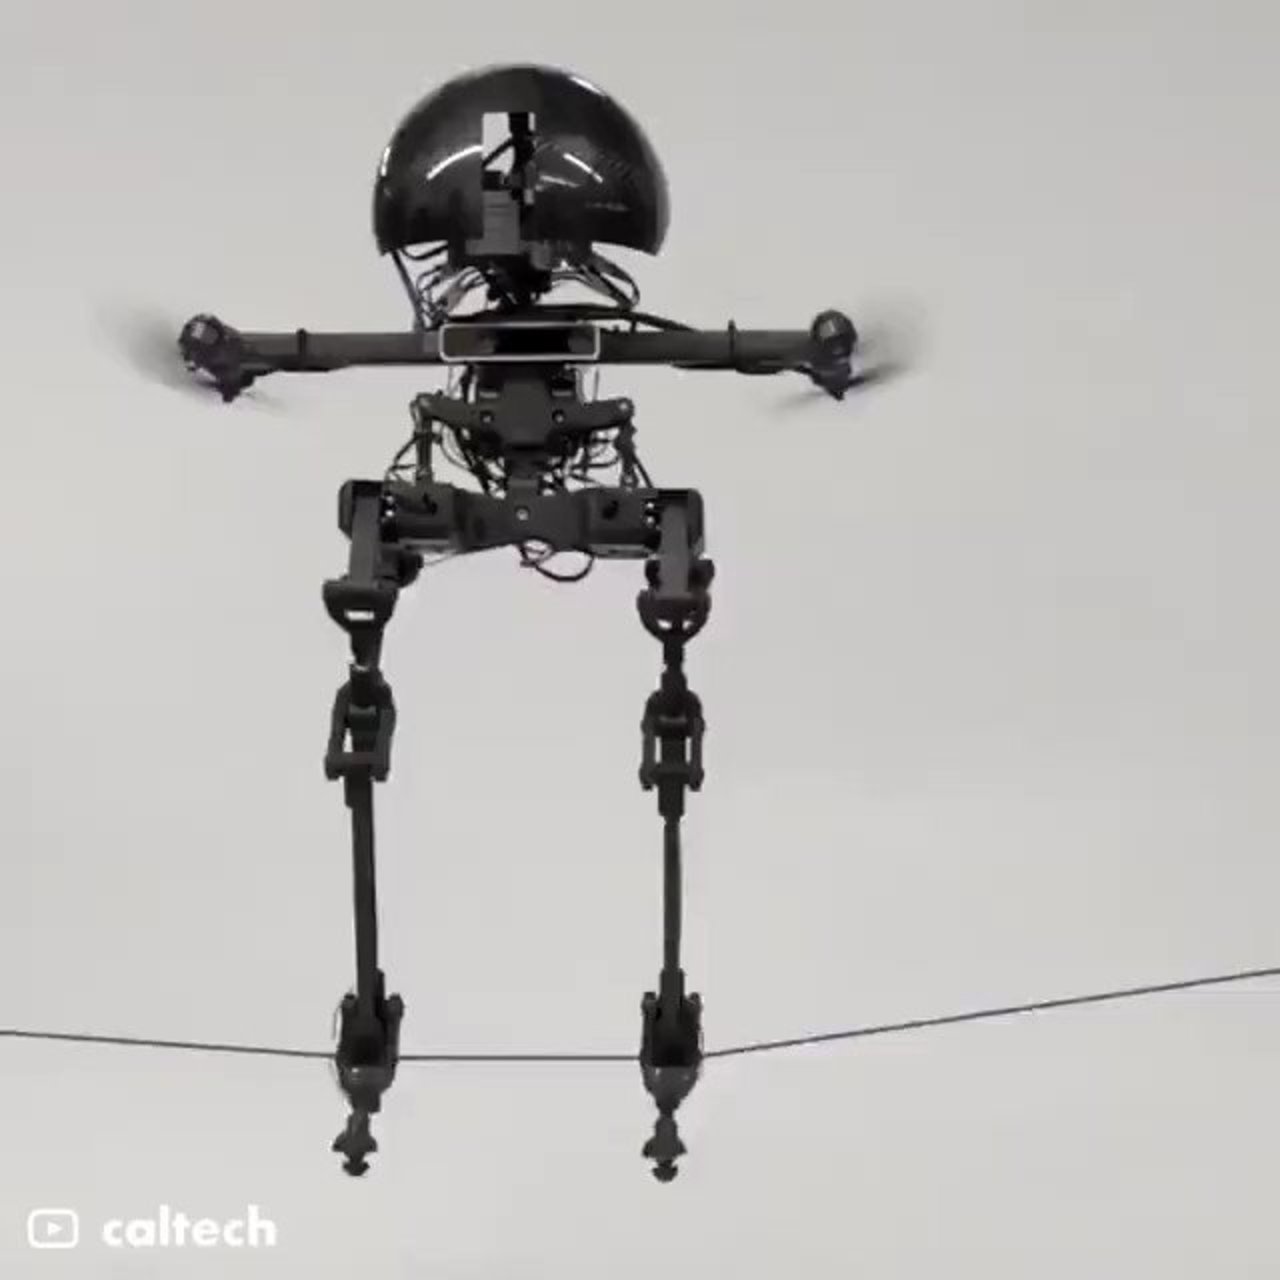 This #Robot can walk on a slackline, ride a skateboard, and even fly by @gigadgets_ #AI #ArtificialIntelligence #MI #Robotics #Innovation #Tech #Technology #EmergingTech cc: @ronald_vanloon @kuriharan @ravikikan https://t.co/VBGa4O0hks